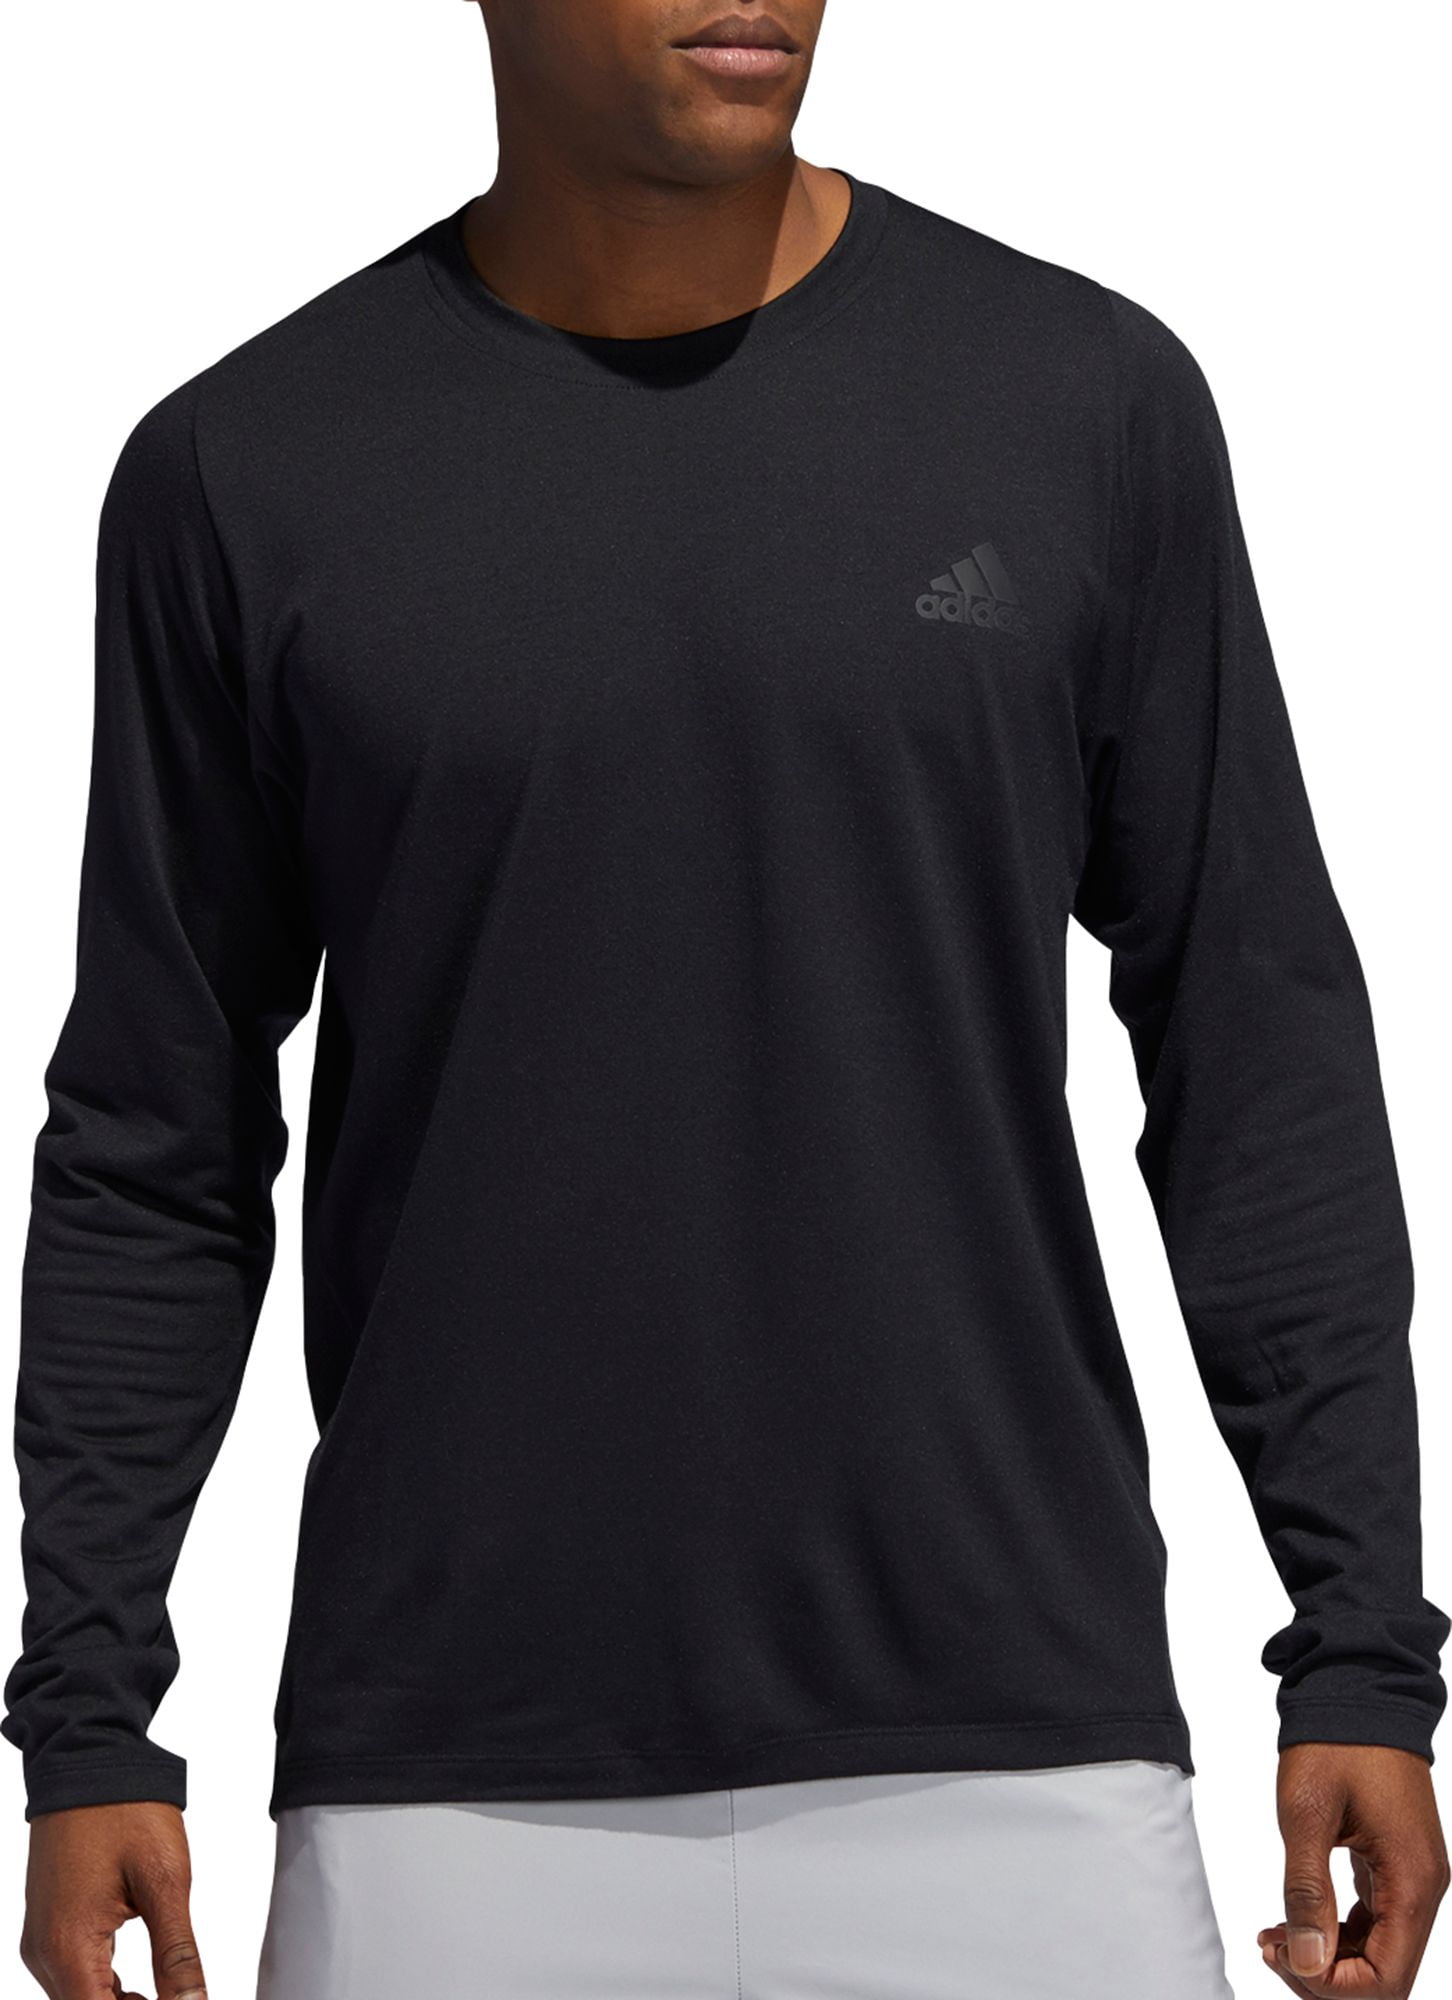 Adidas - adidas Men's FreeLift Long Sleeve Shirt - Walmart.com ...